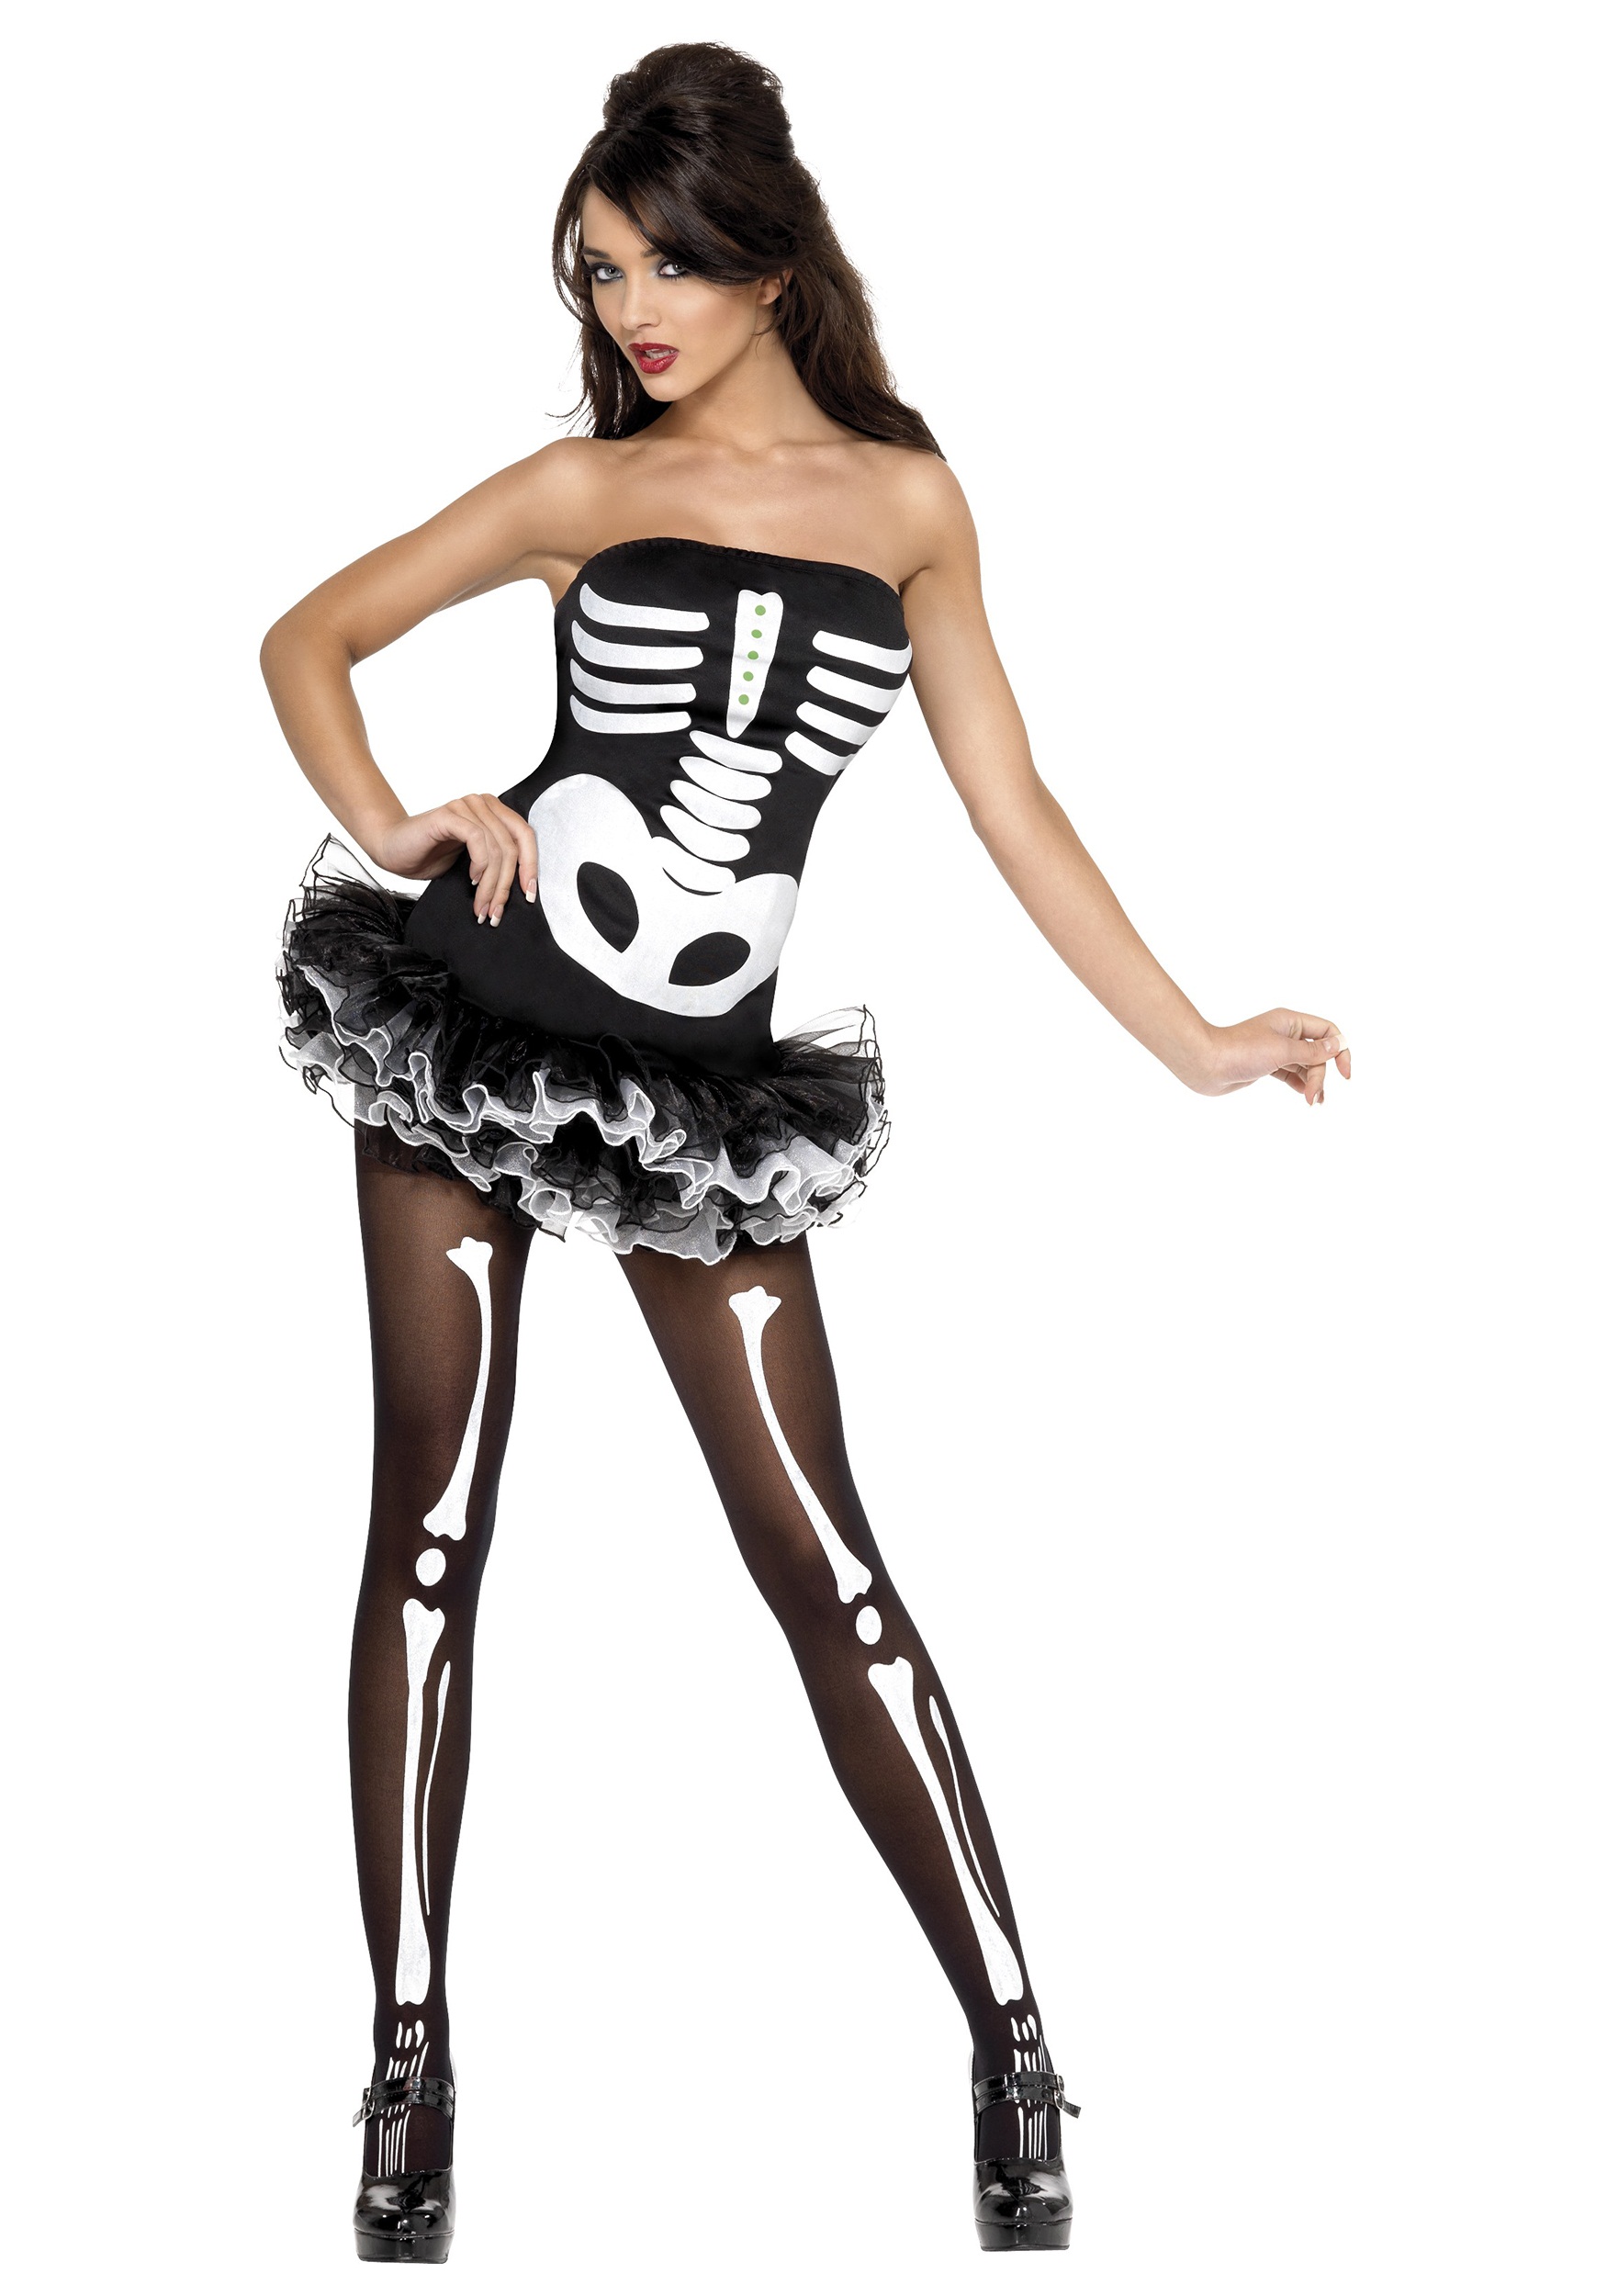 Ladies Skeleton Costume Tutu Dress Outfit Ladies Halloween Womens Bones Costume